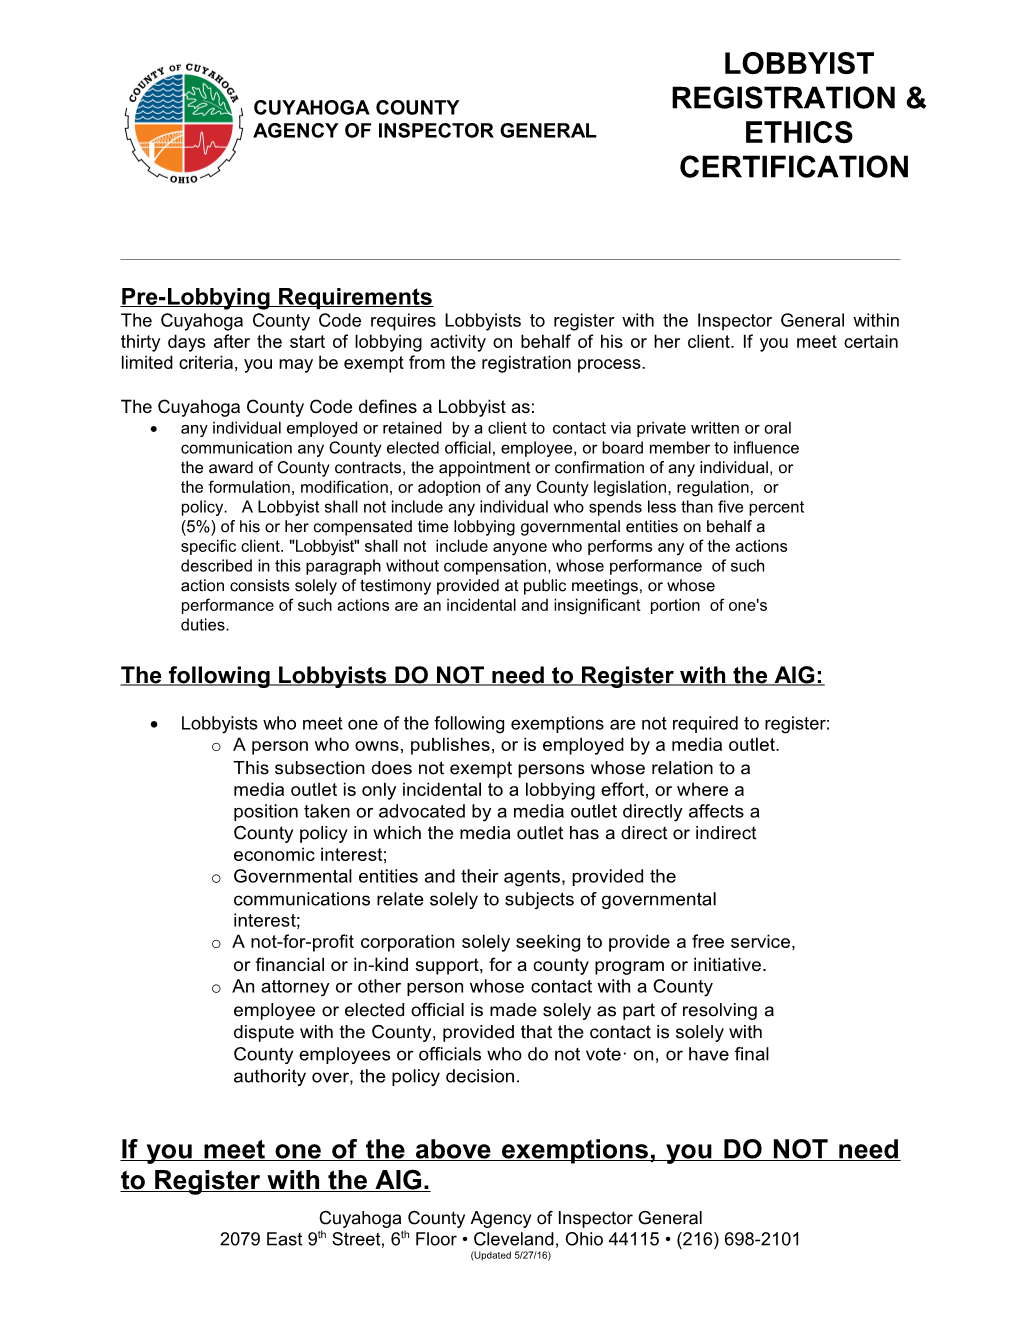 Lobbyist Registration & Ethics Certification Form